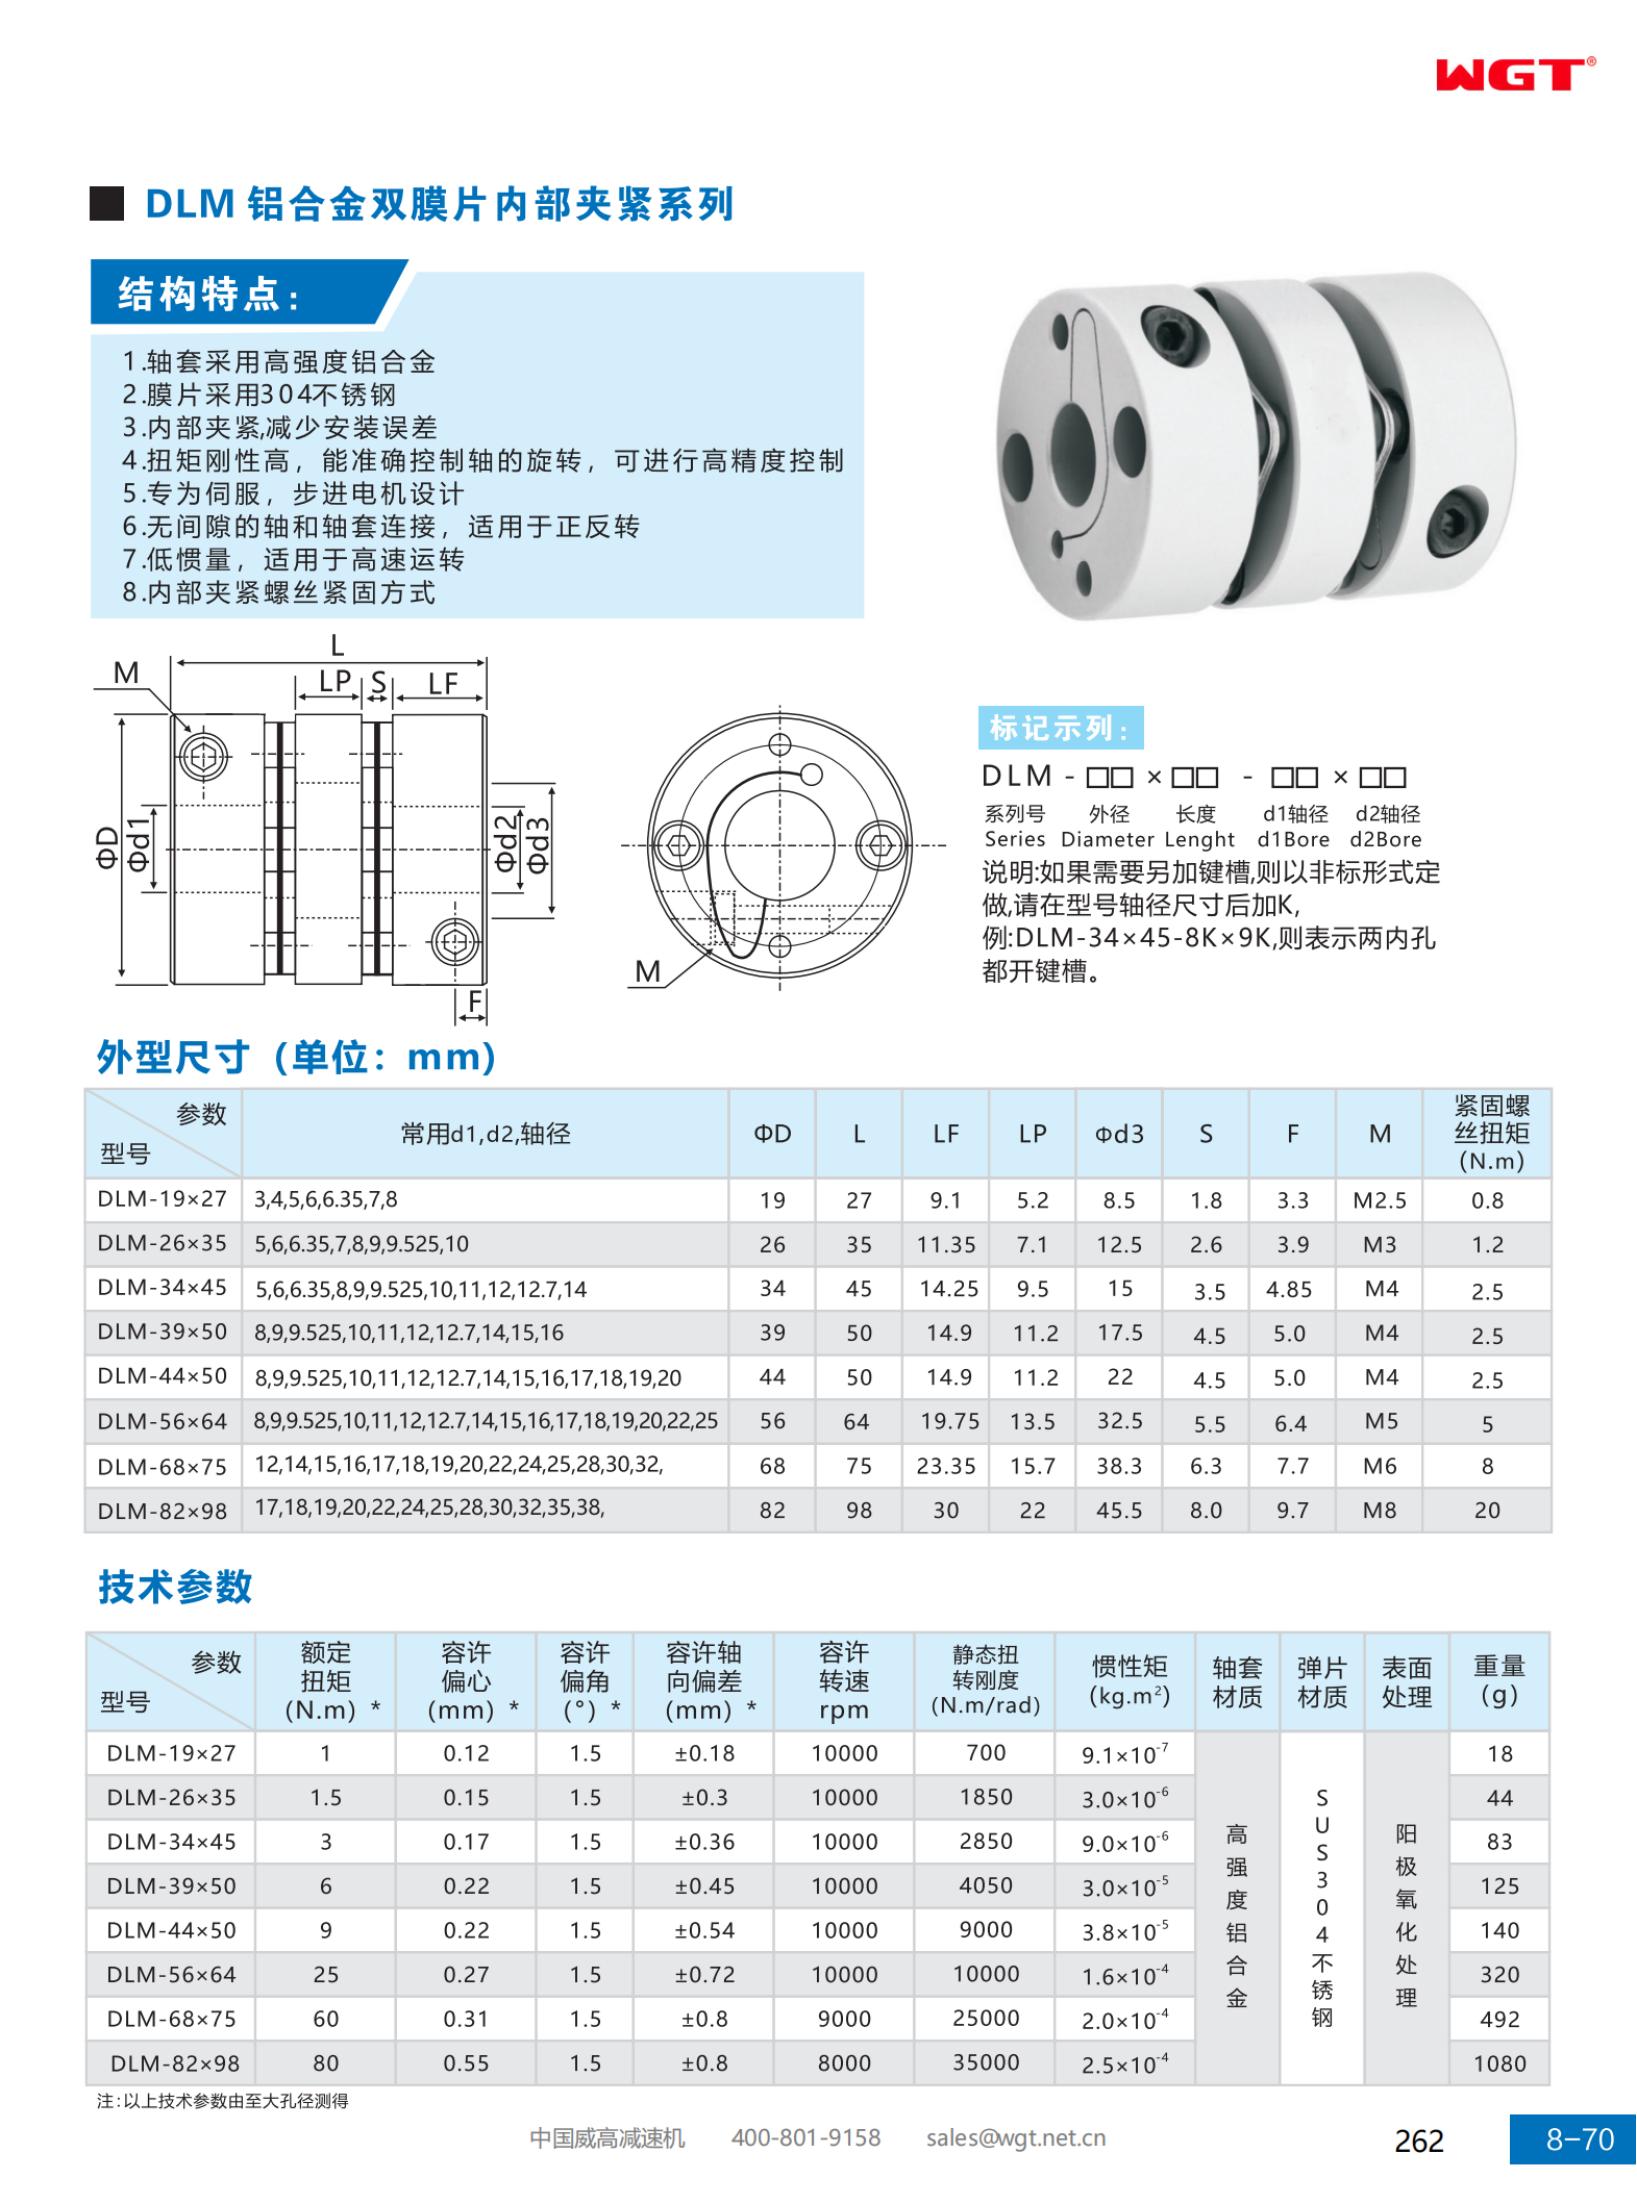 DLM aluminum alloy double diaphragm internal clamping series